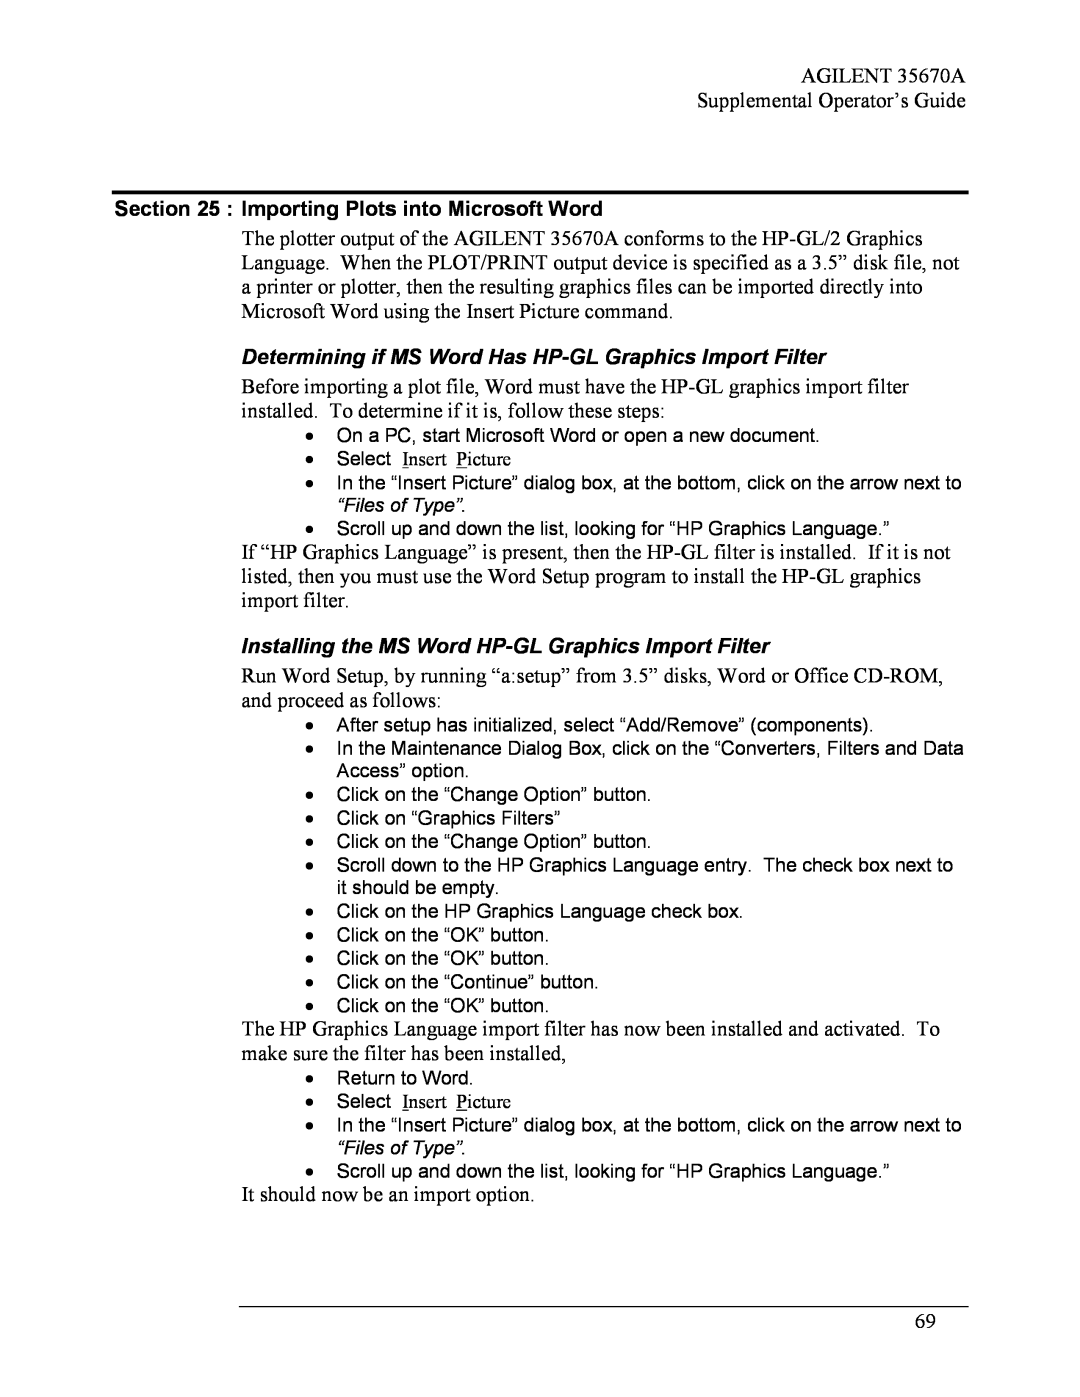 Agilent Technologies Agilent 35670A manual Importing Plots into Microsoft Word 